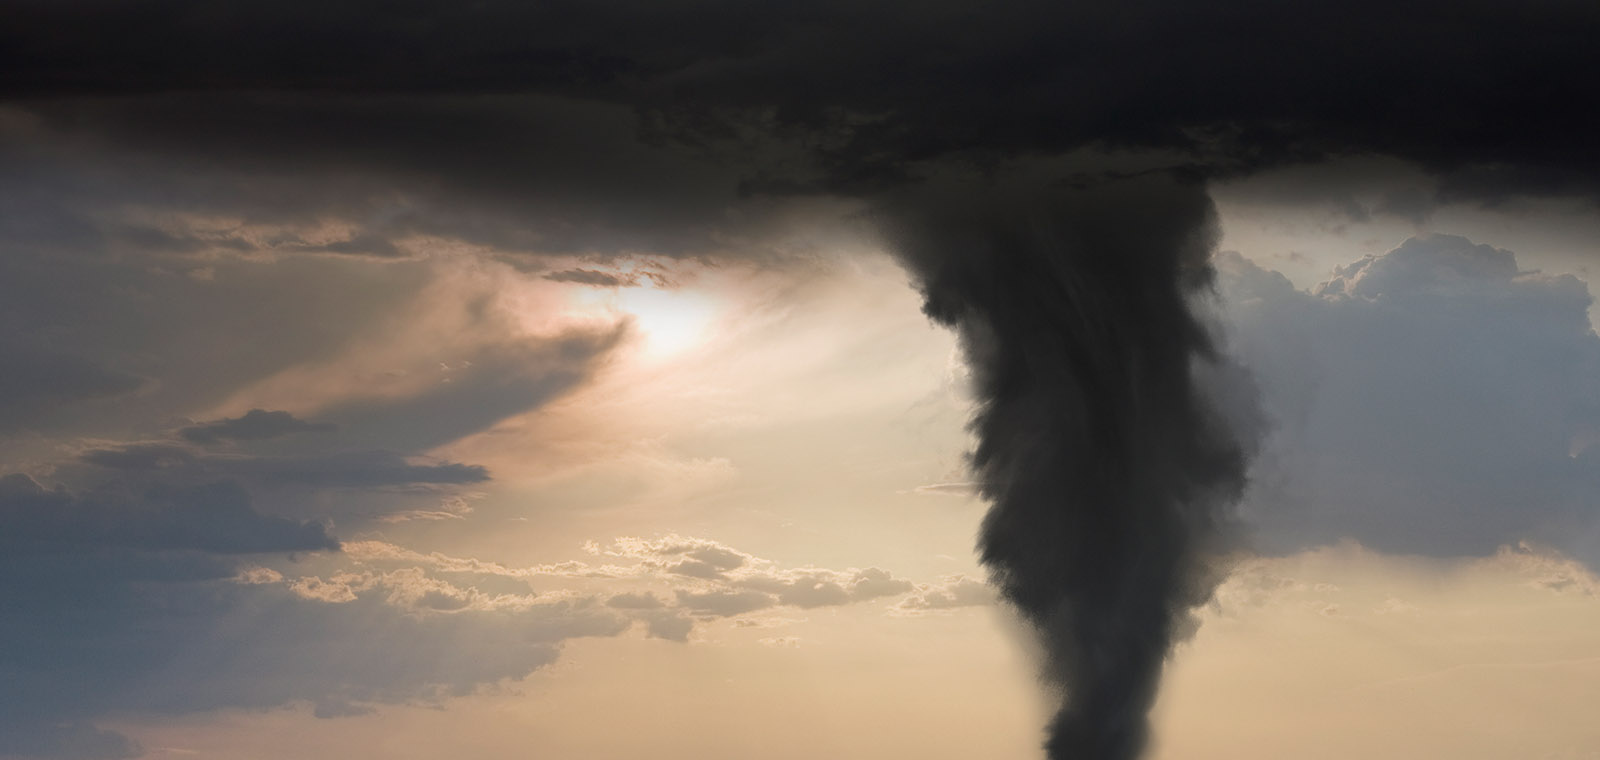 The menacing shape of an oncoming tornado dominates the skyline over a bleak landscape.